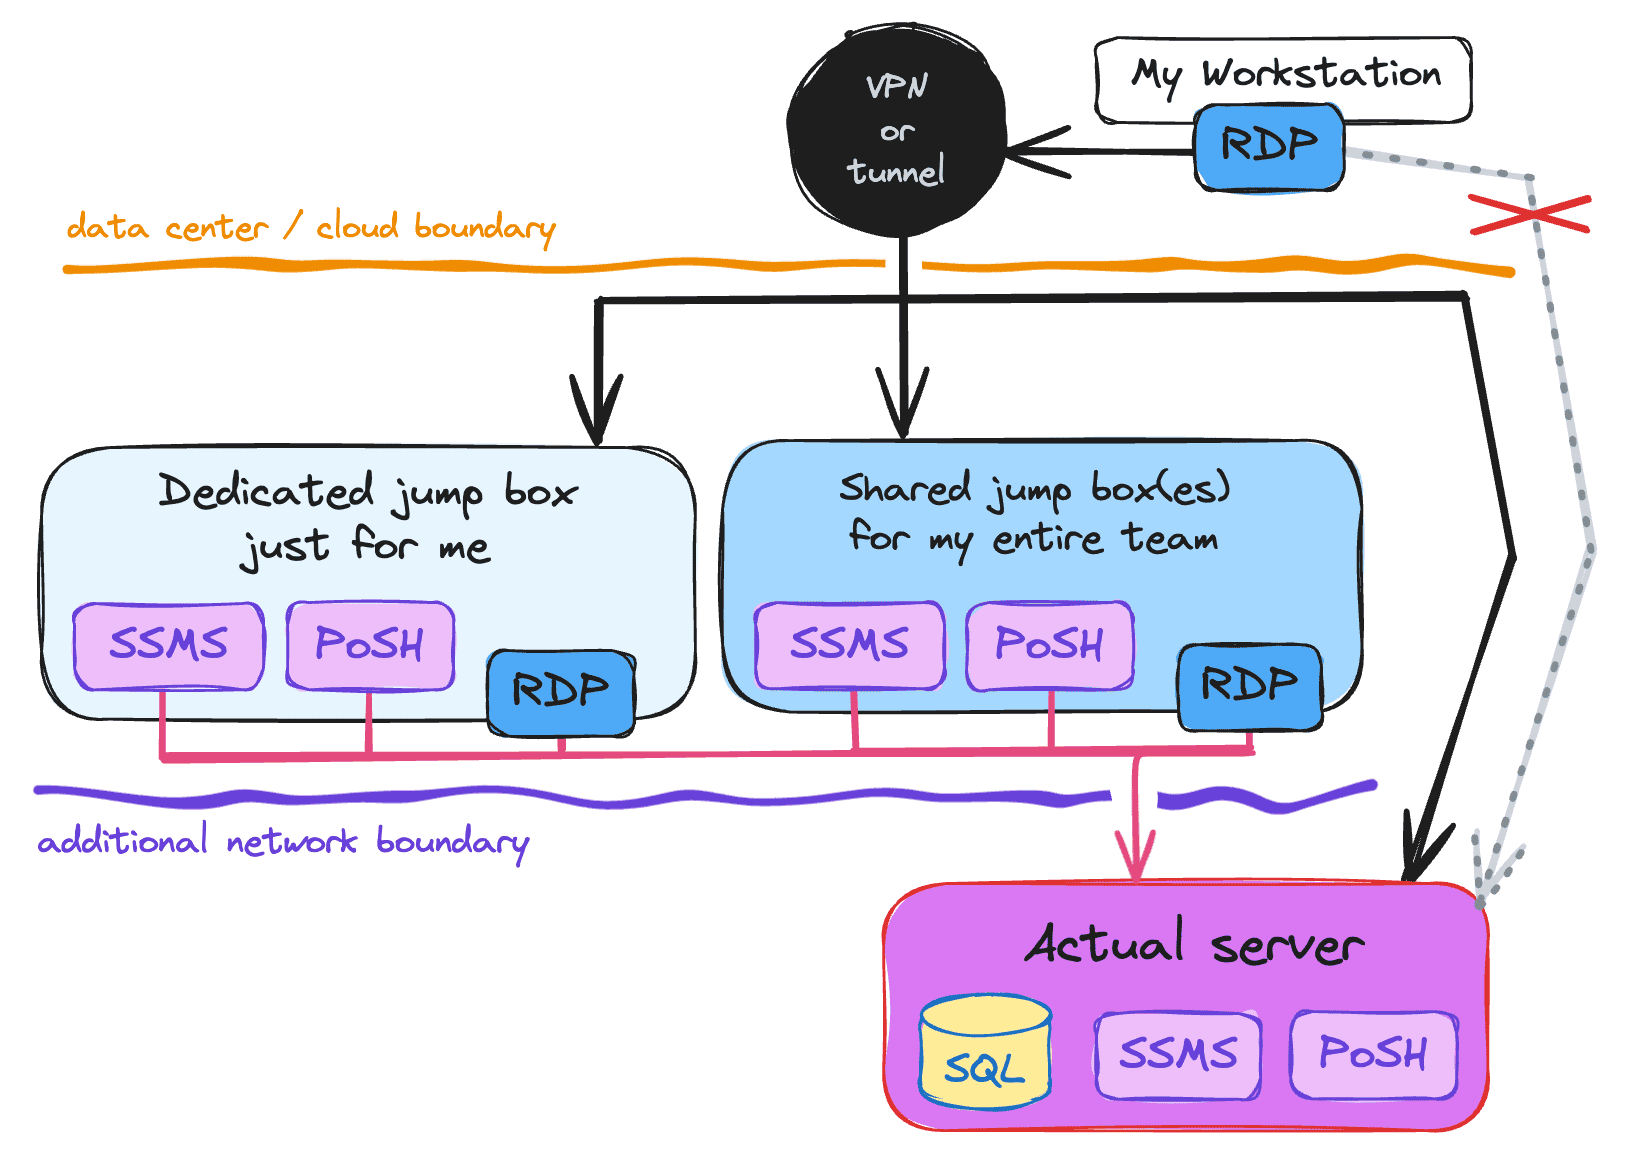 Simple network/RDP diagram